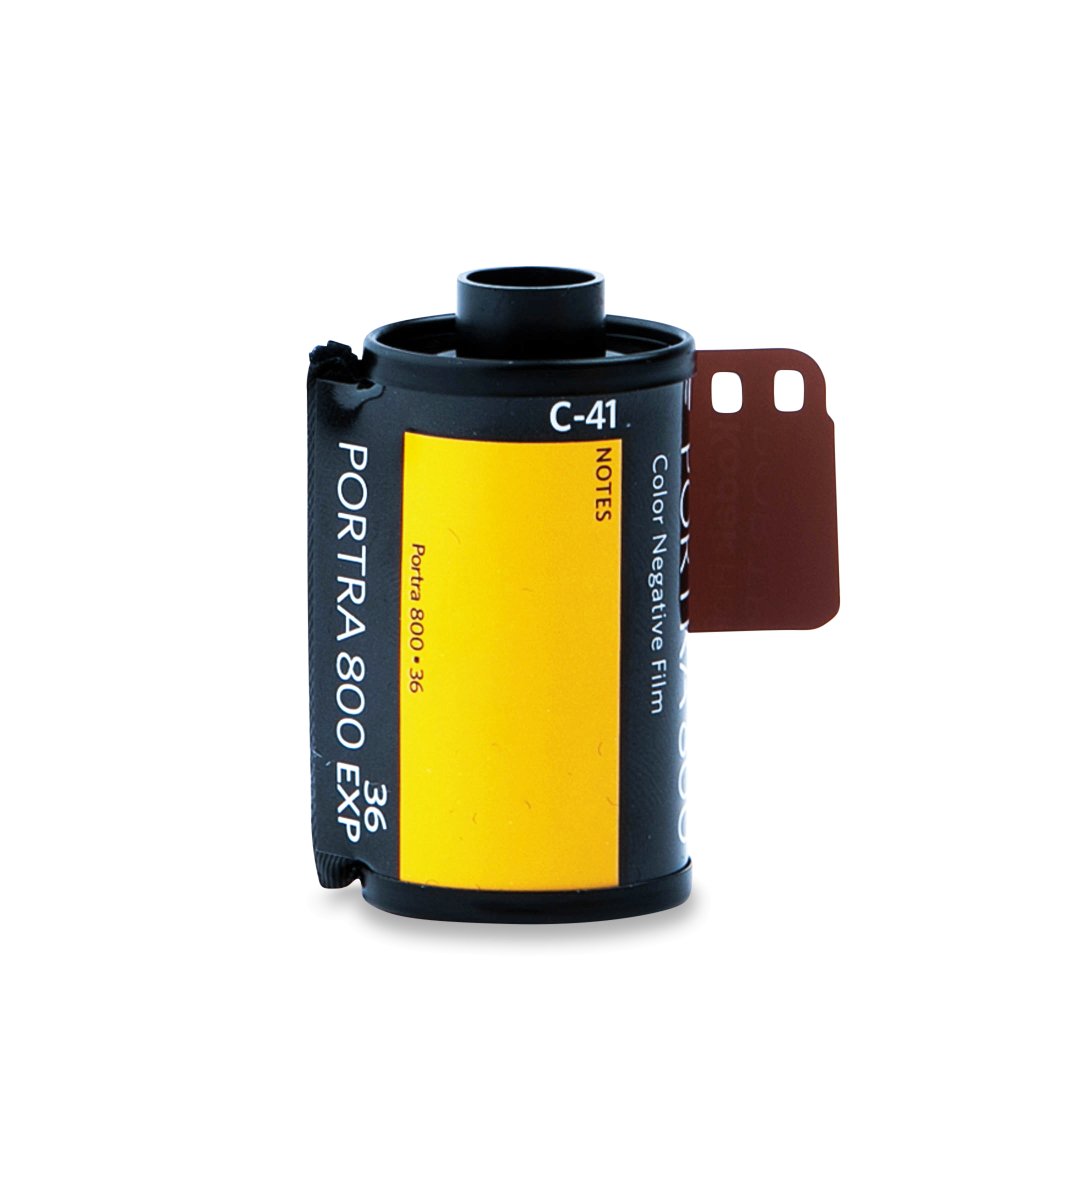 Kodak Portra 800 - 35mm - 36 Exposure - Single Roll